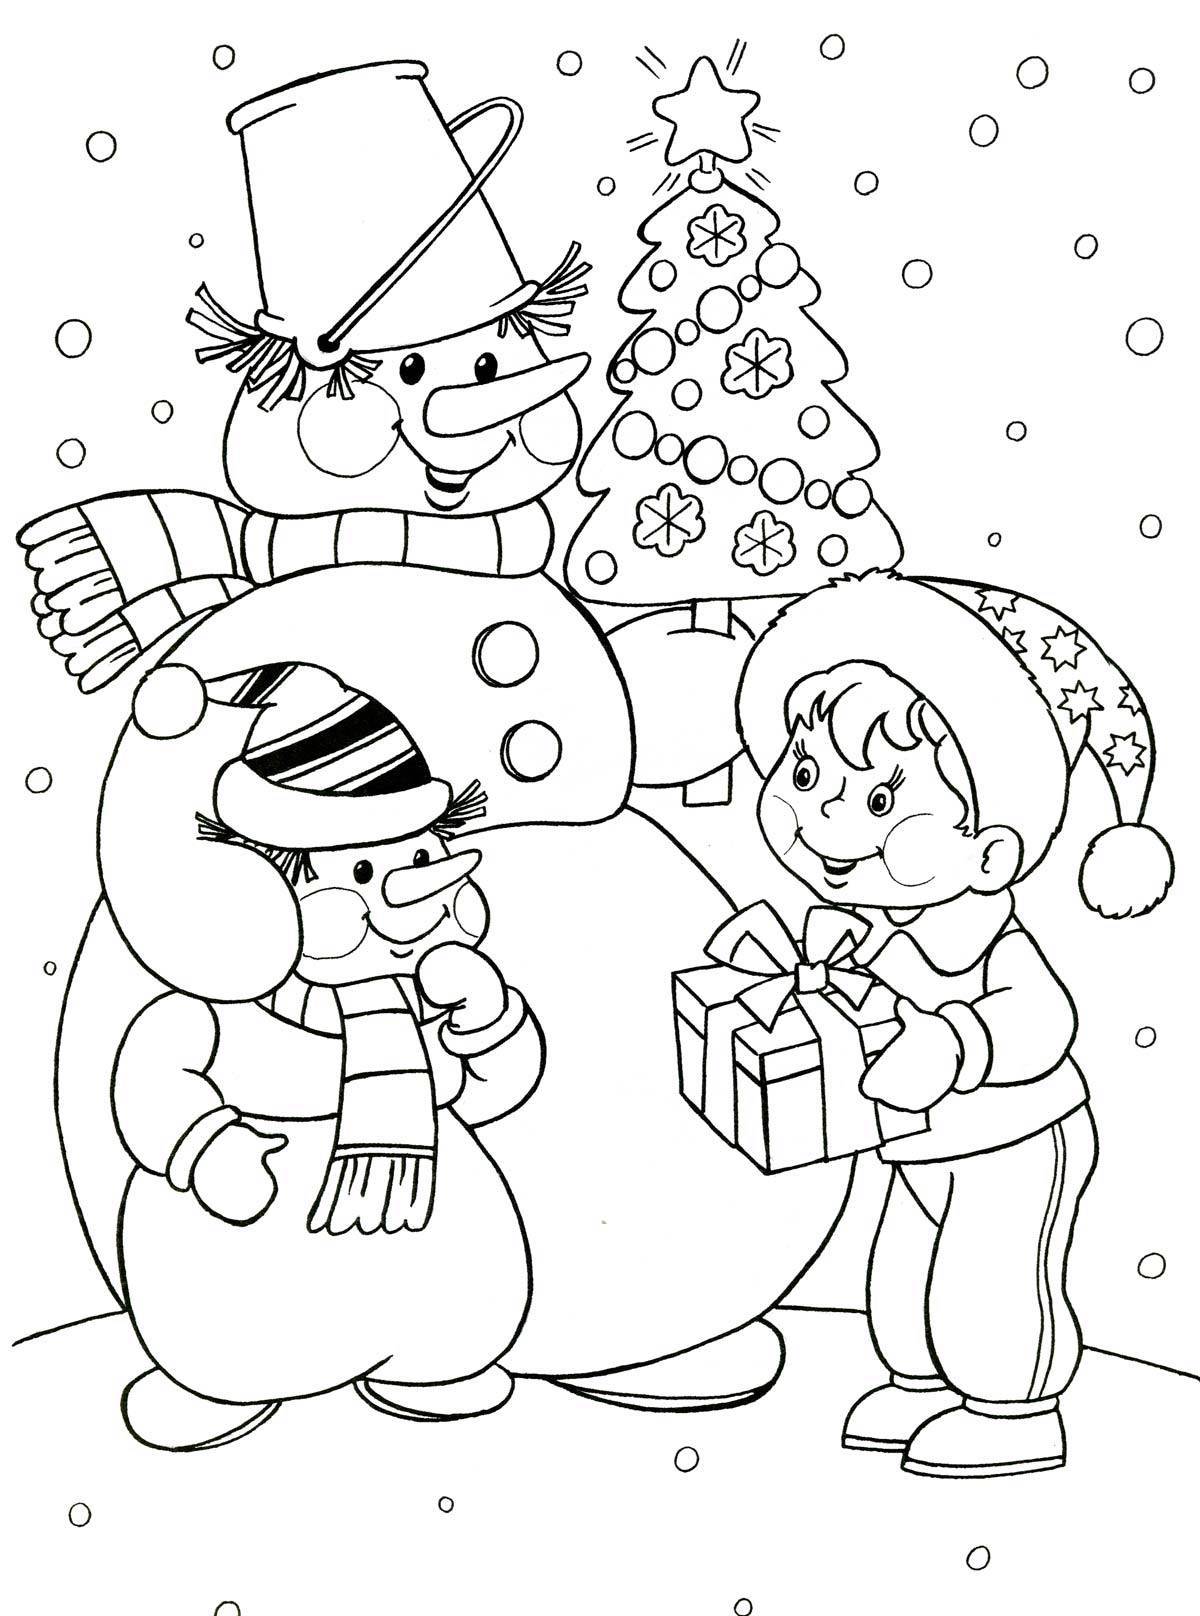 Radiant Christmas drawings